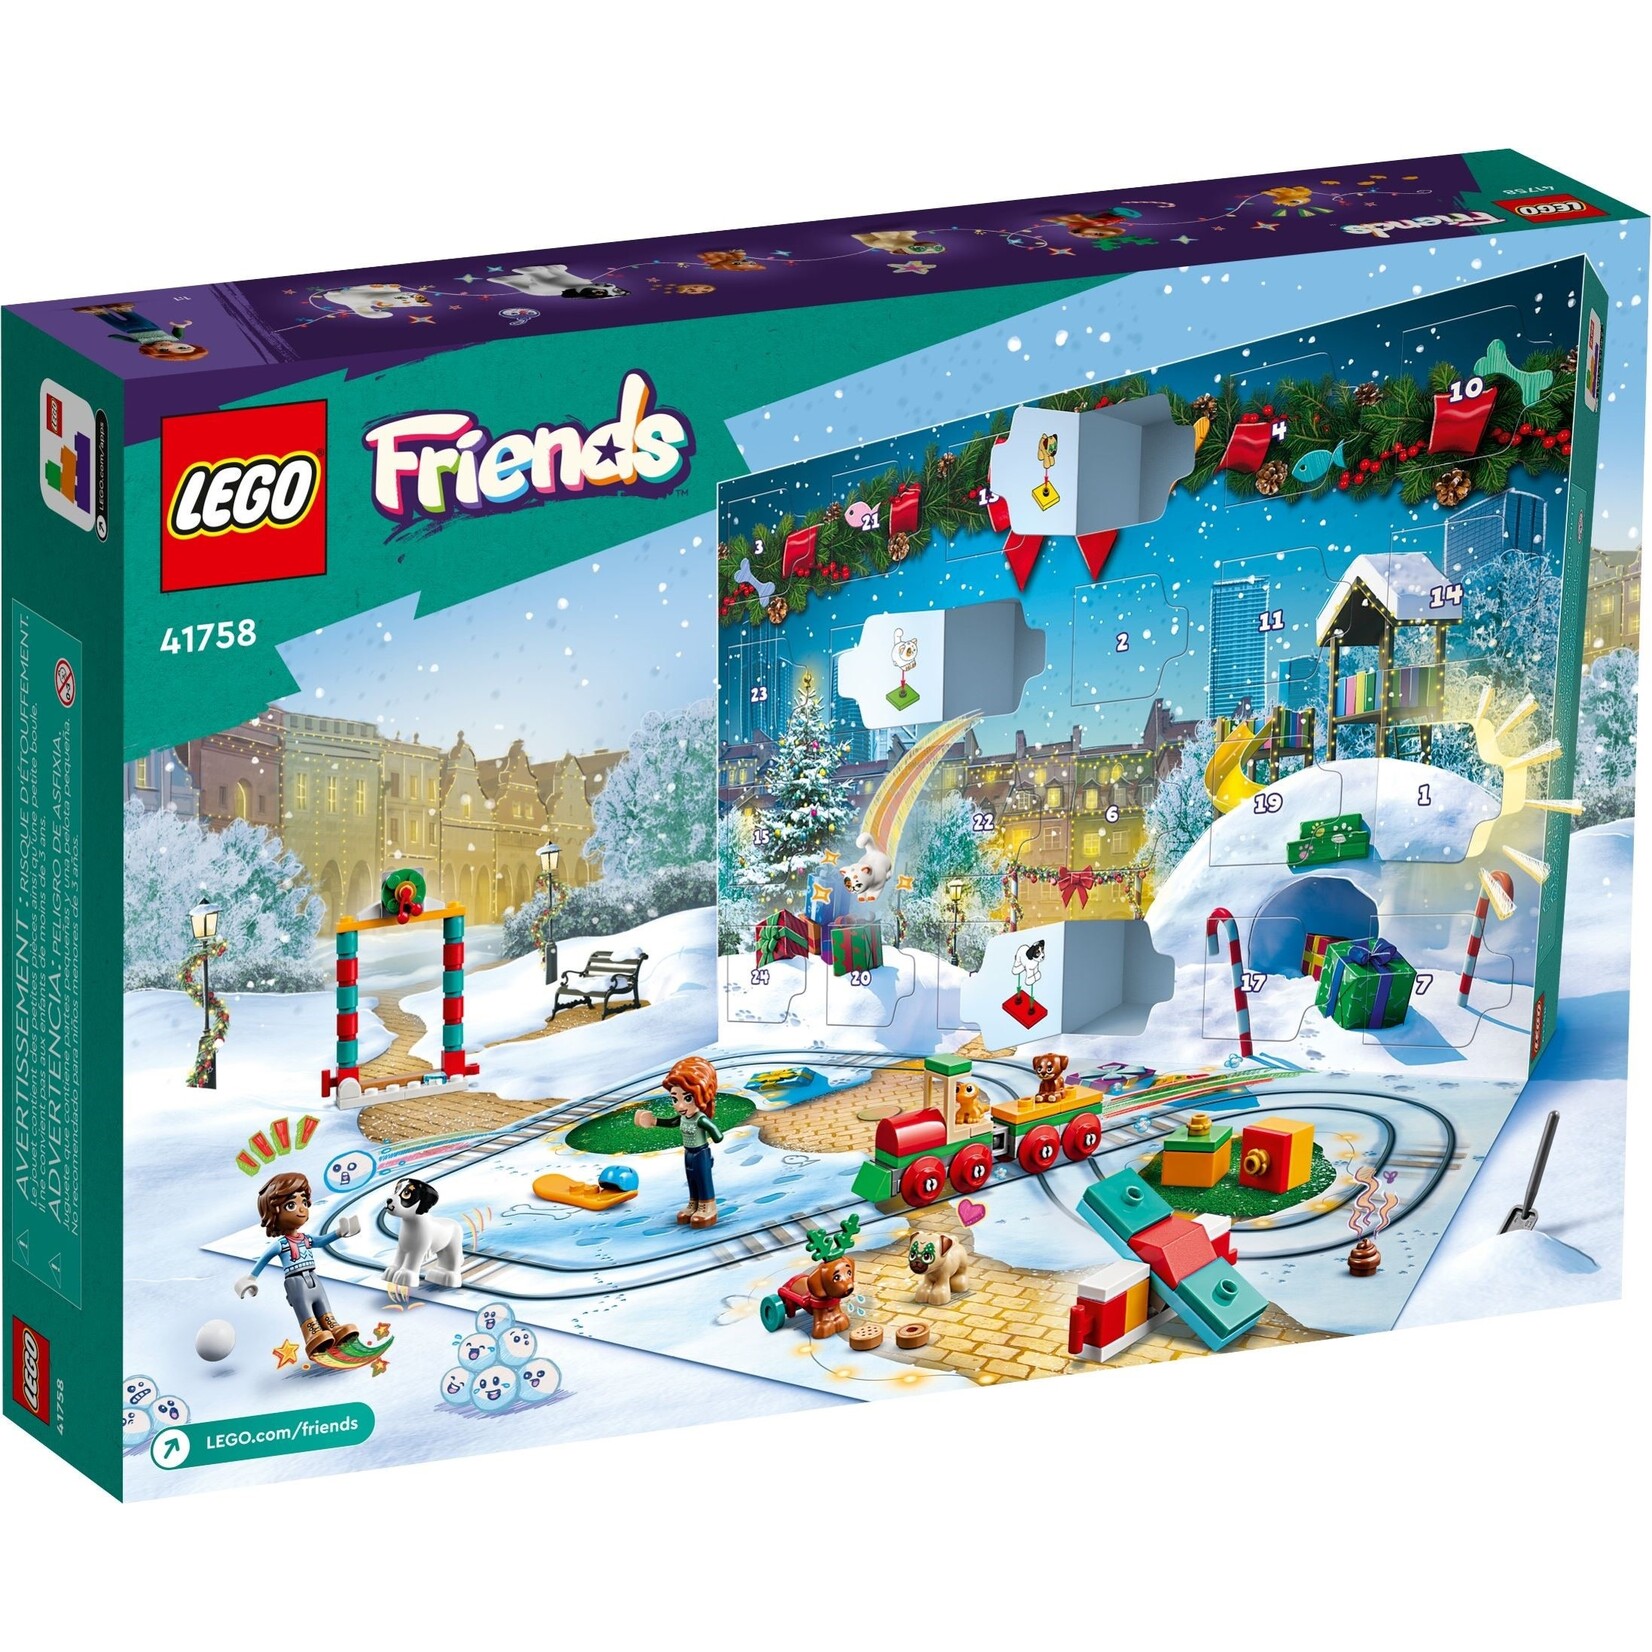 LEGO Friends Adventkalender - 41758